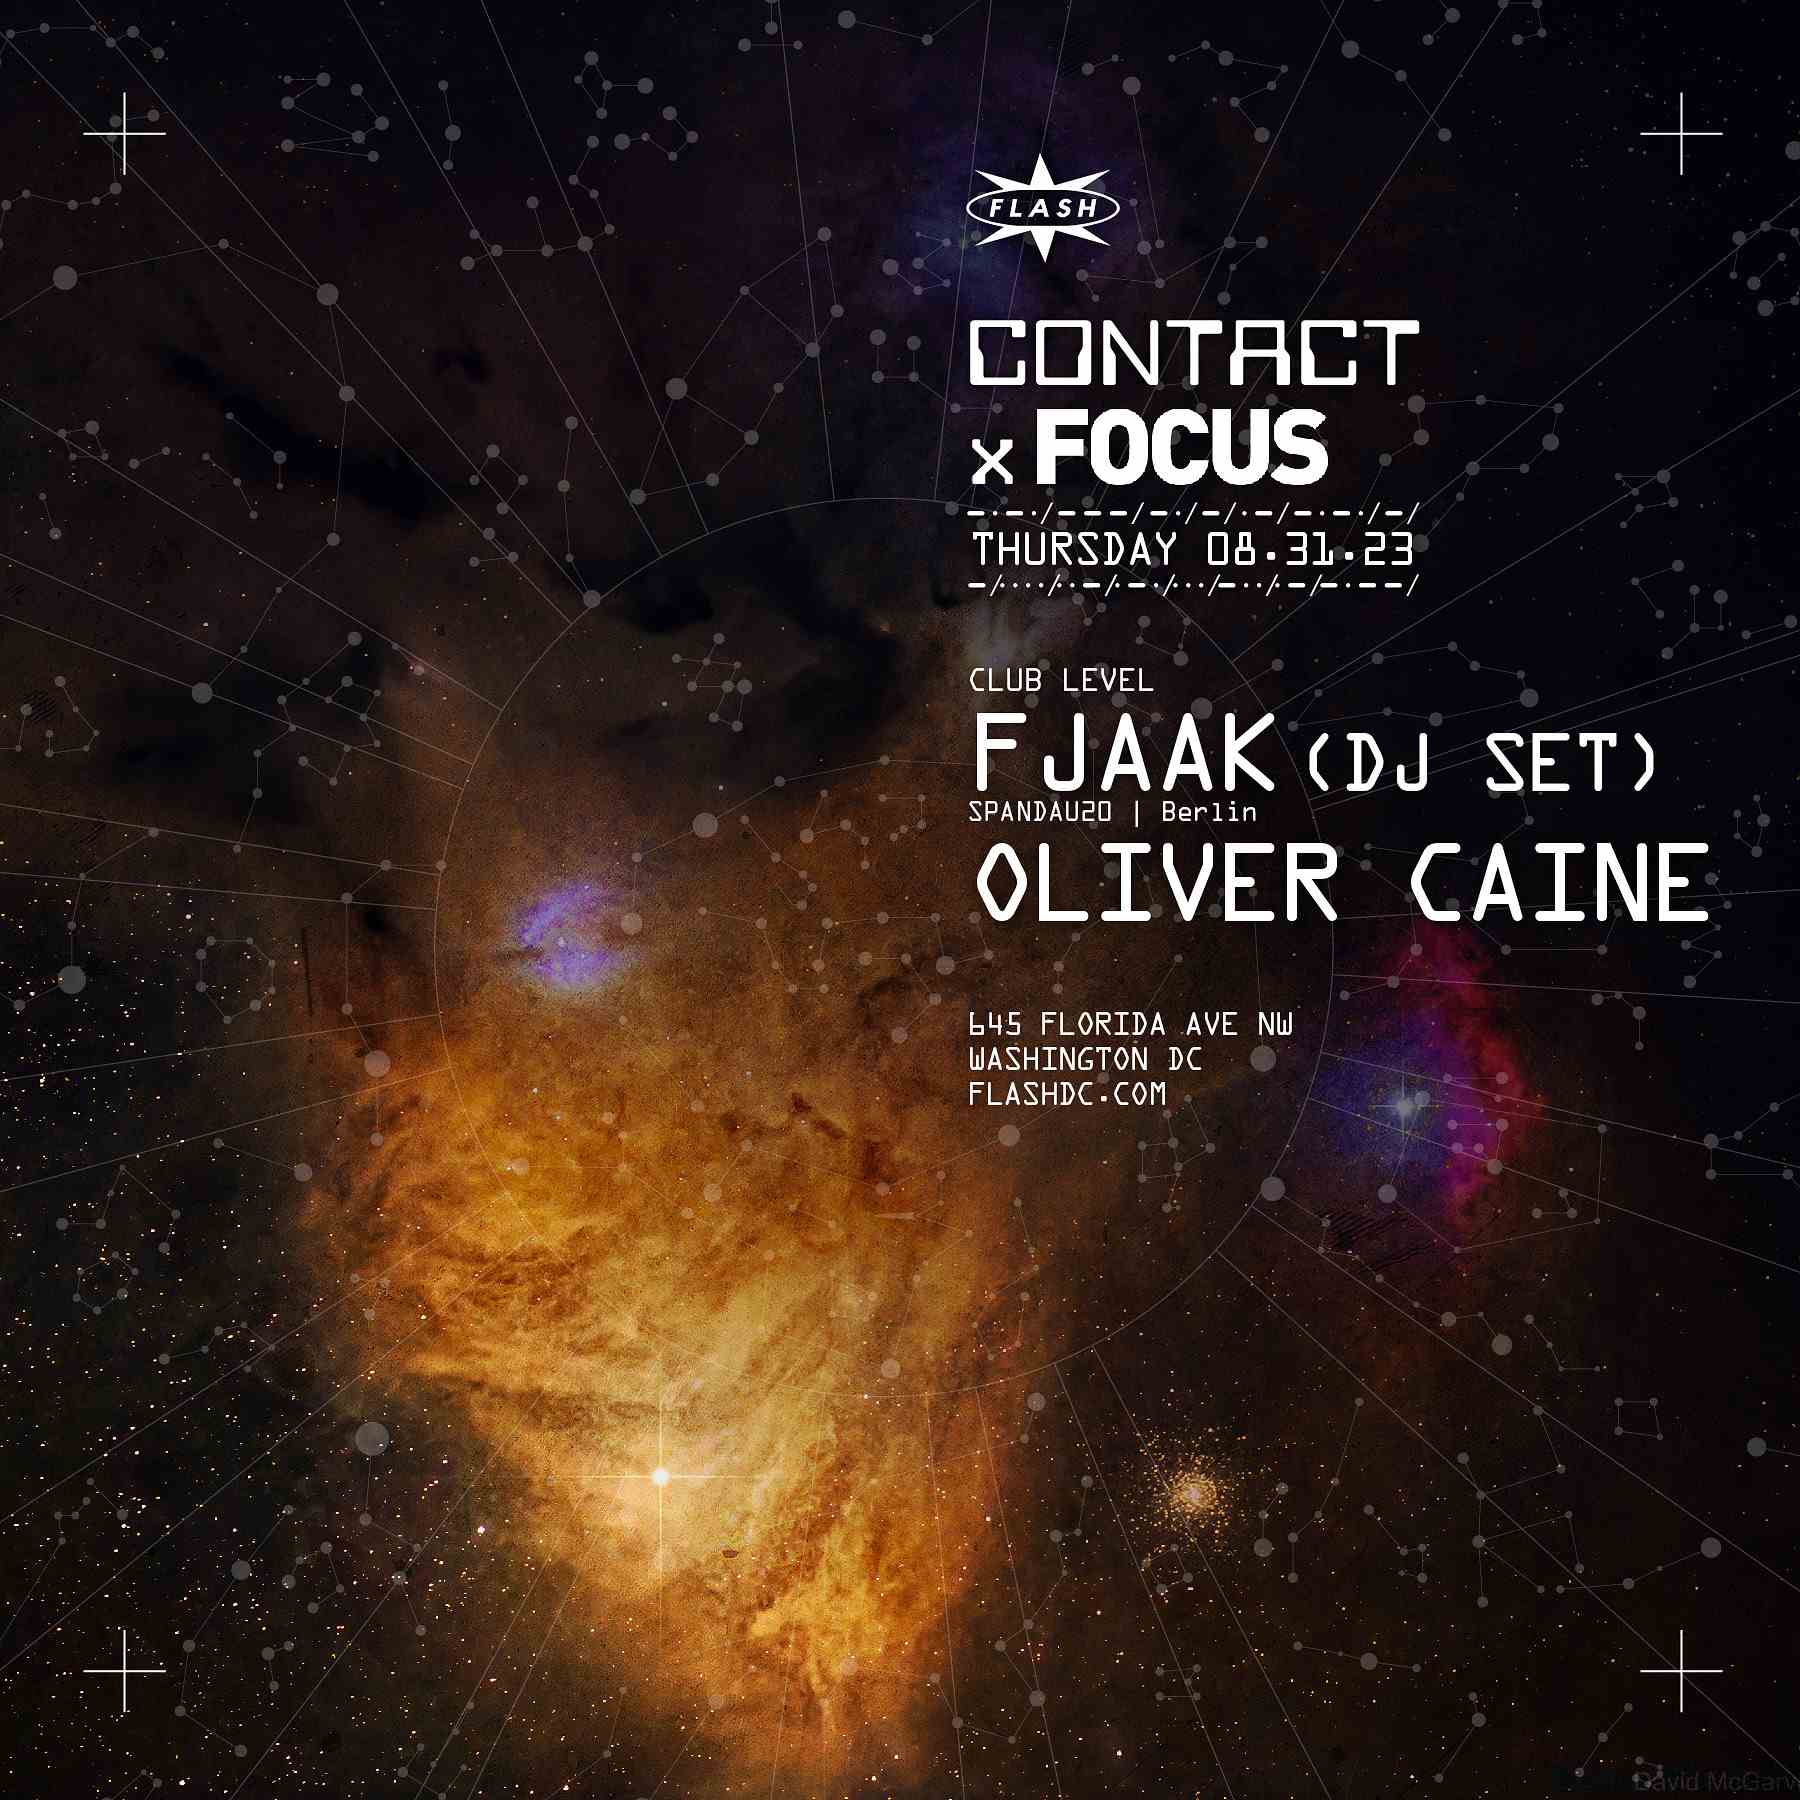 CONTACT x FOCUS: FJAAK (DJ set) event flyer